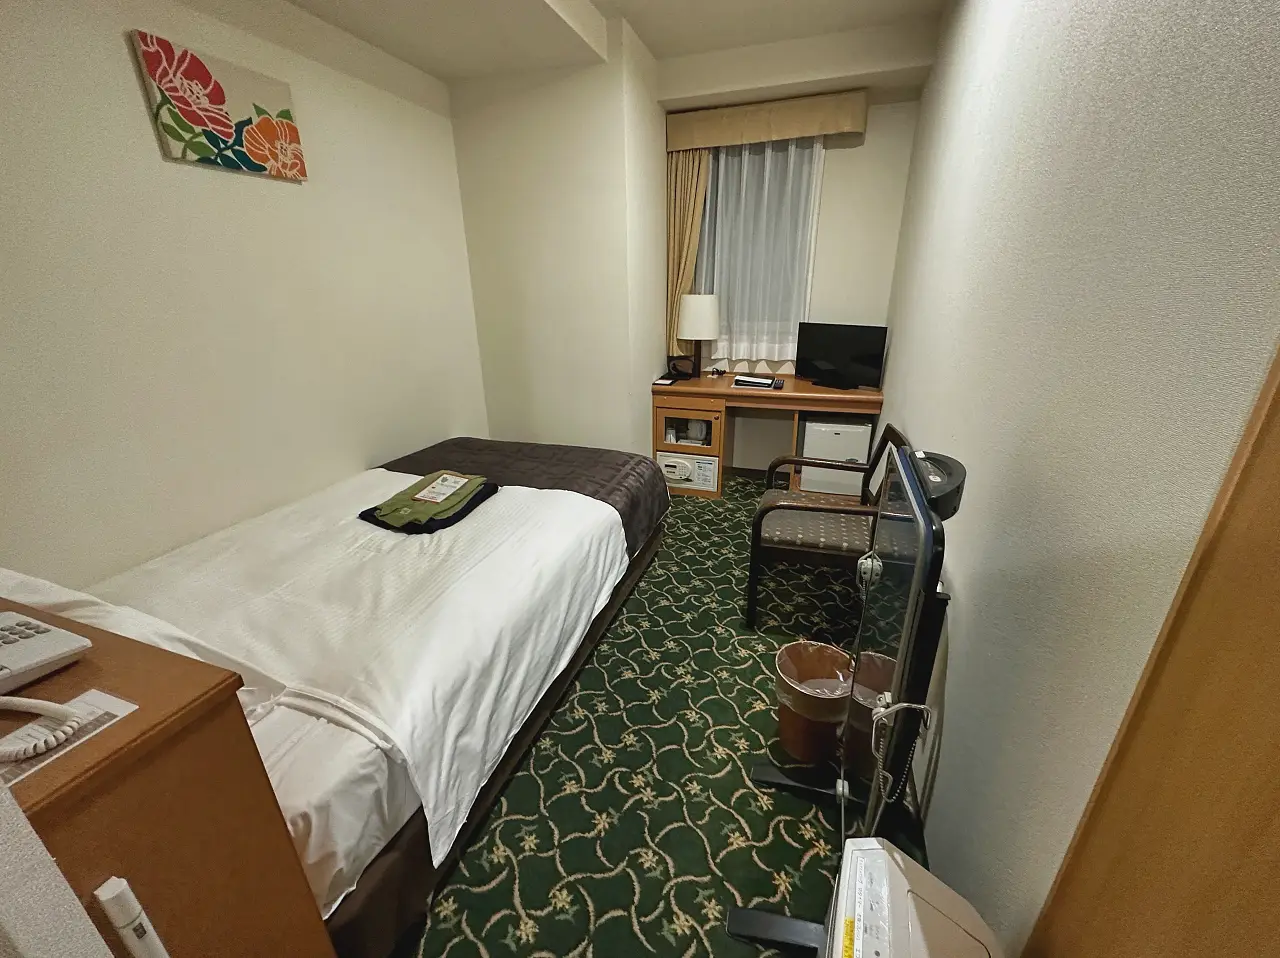 Breakfast Review : “Tower Eleven Hotel” in Eskon Field stadium, Hokkaido,  Japan Enjoy breakfast in your room! Together with the quiet stadium